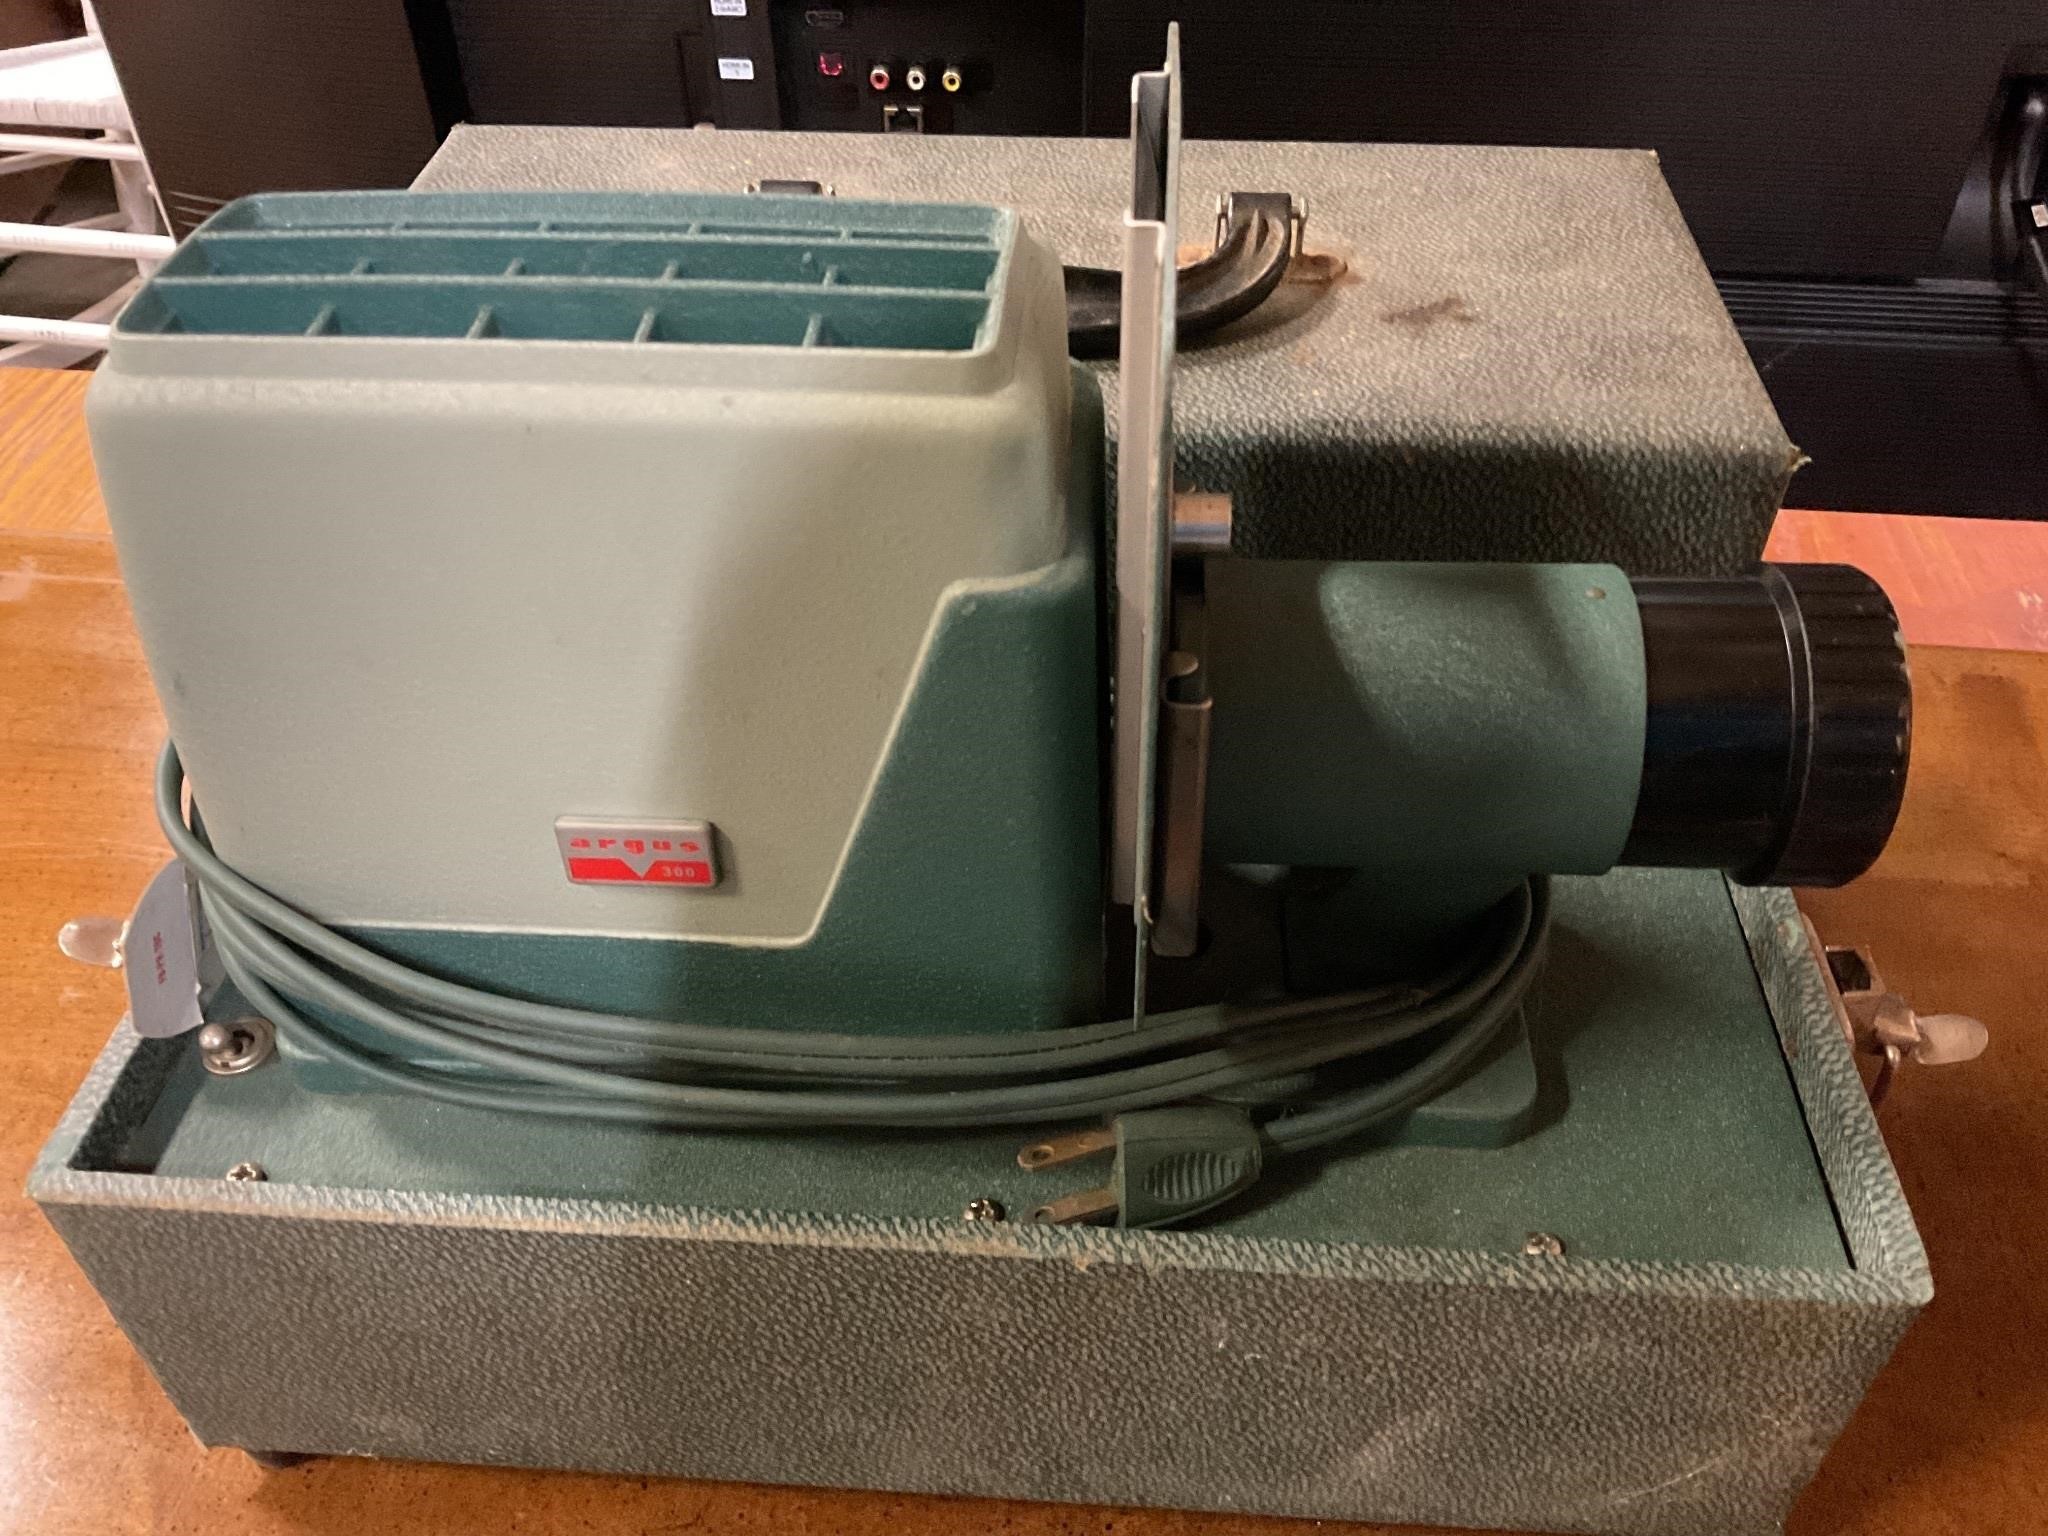 Antique Argus slide projector